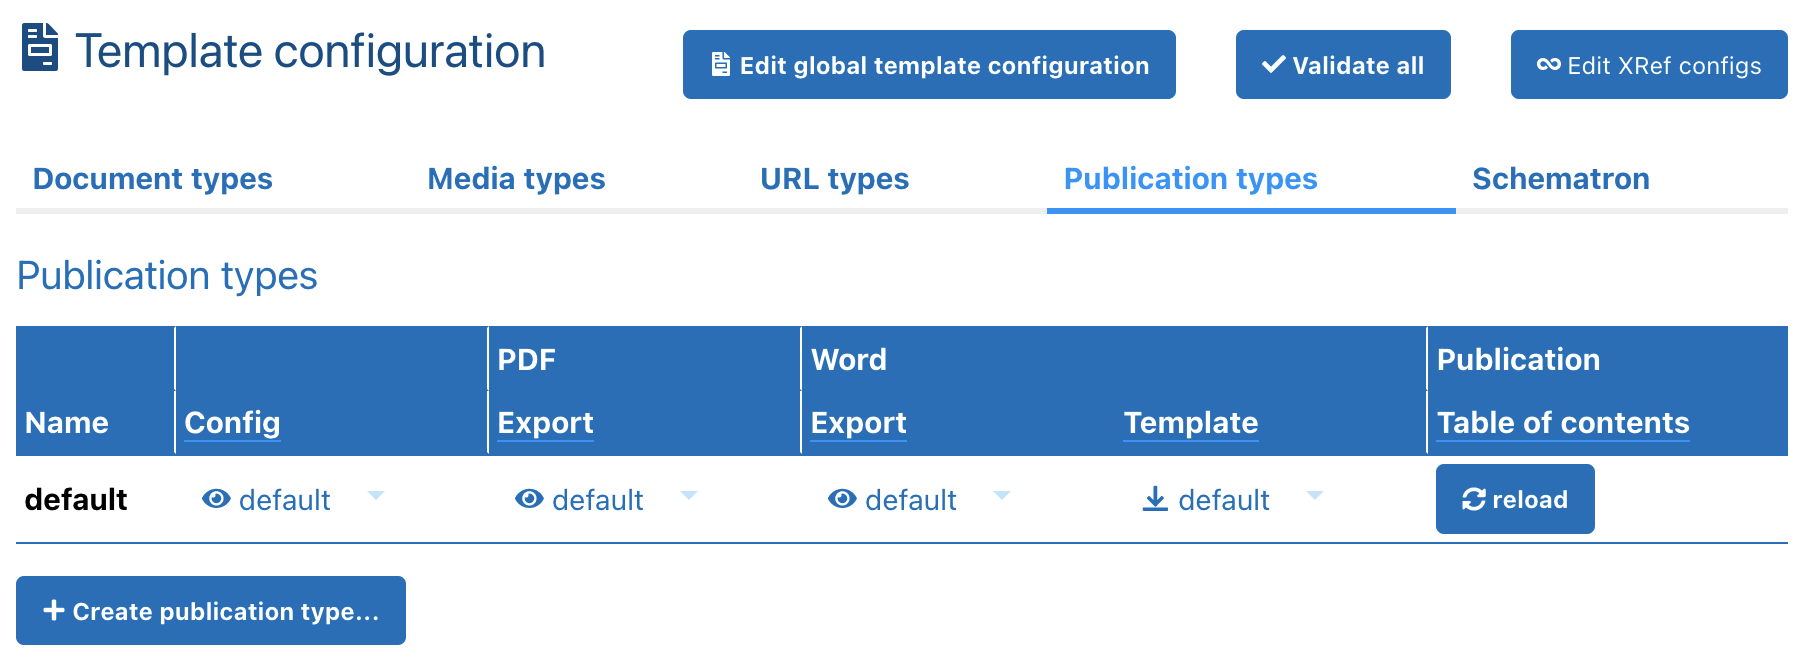 Template configuration – Publication types